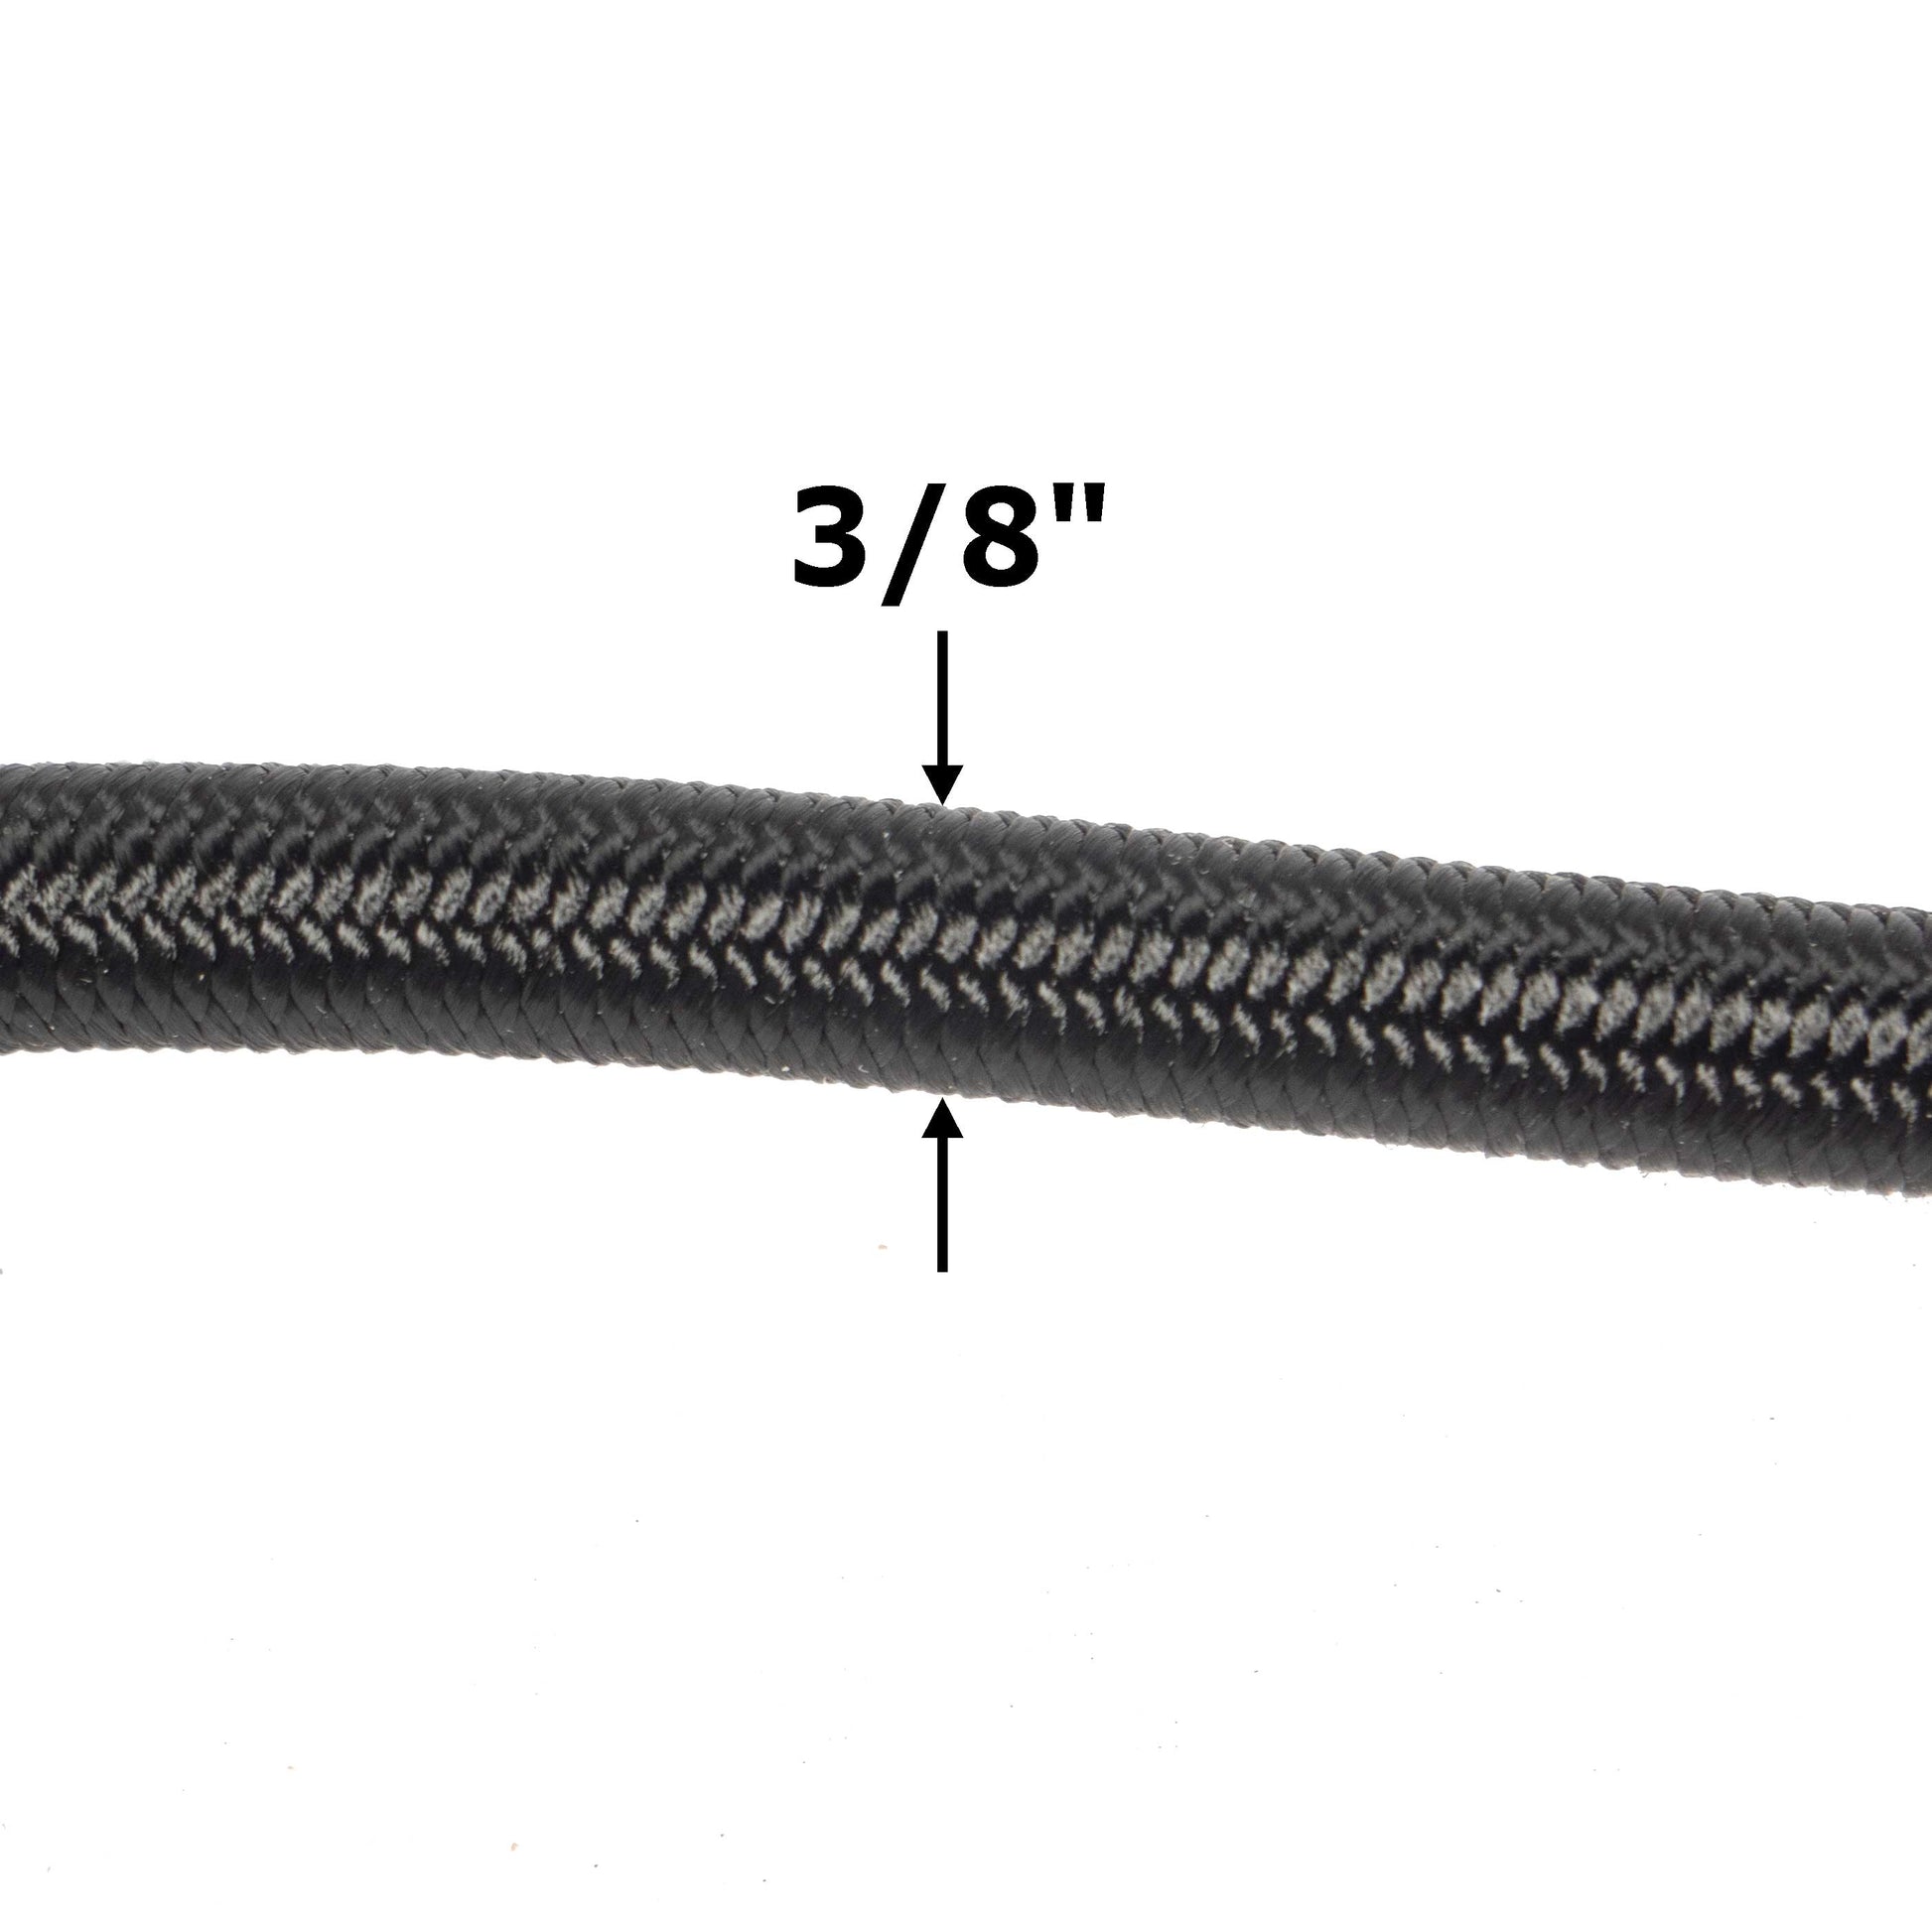 Snap Hook w/ Screw Nut & Eyelet SS T316 - 3-3/16 Length